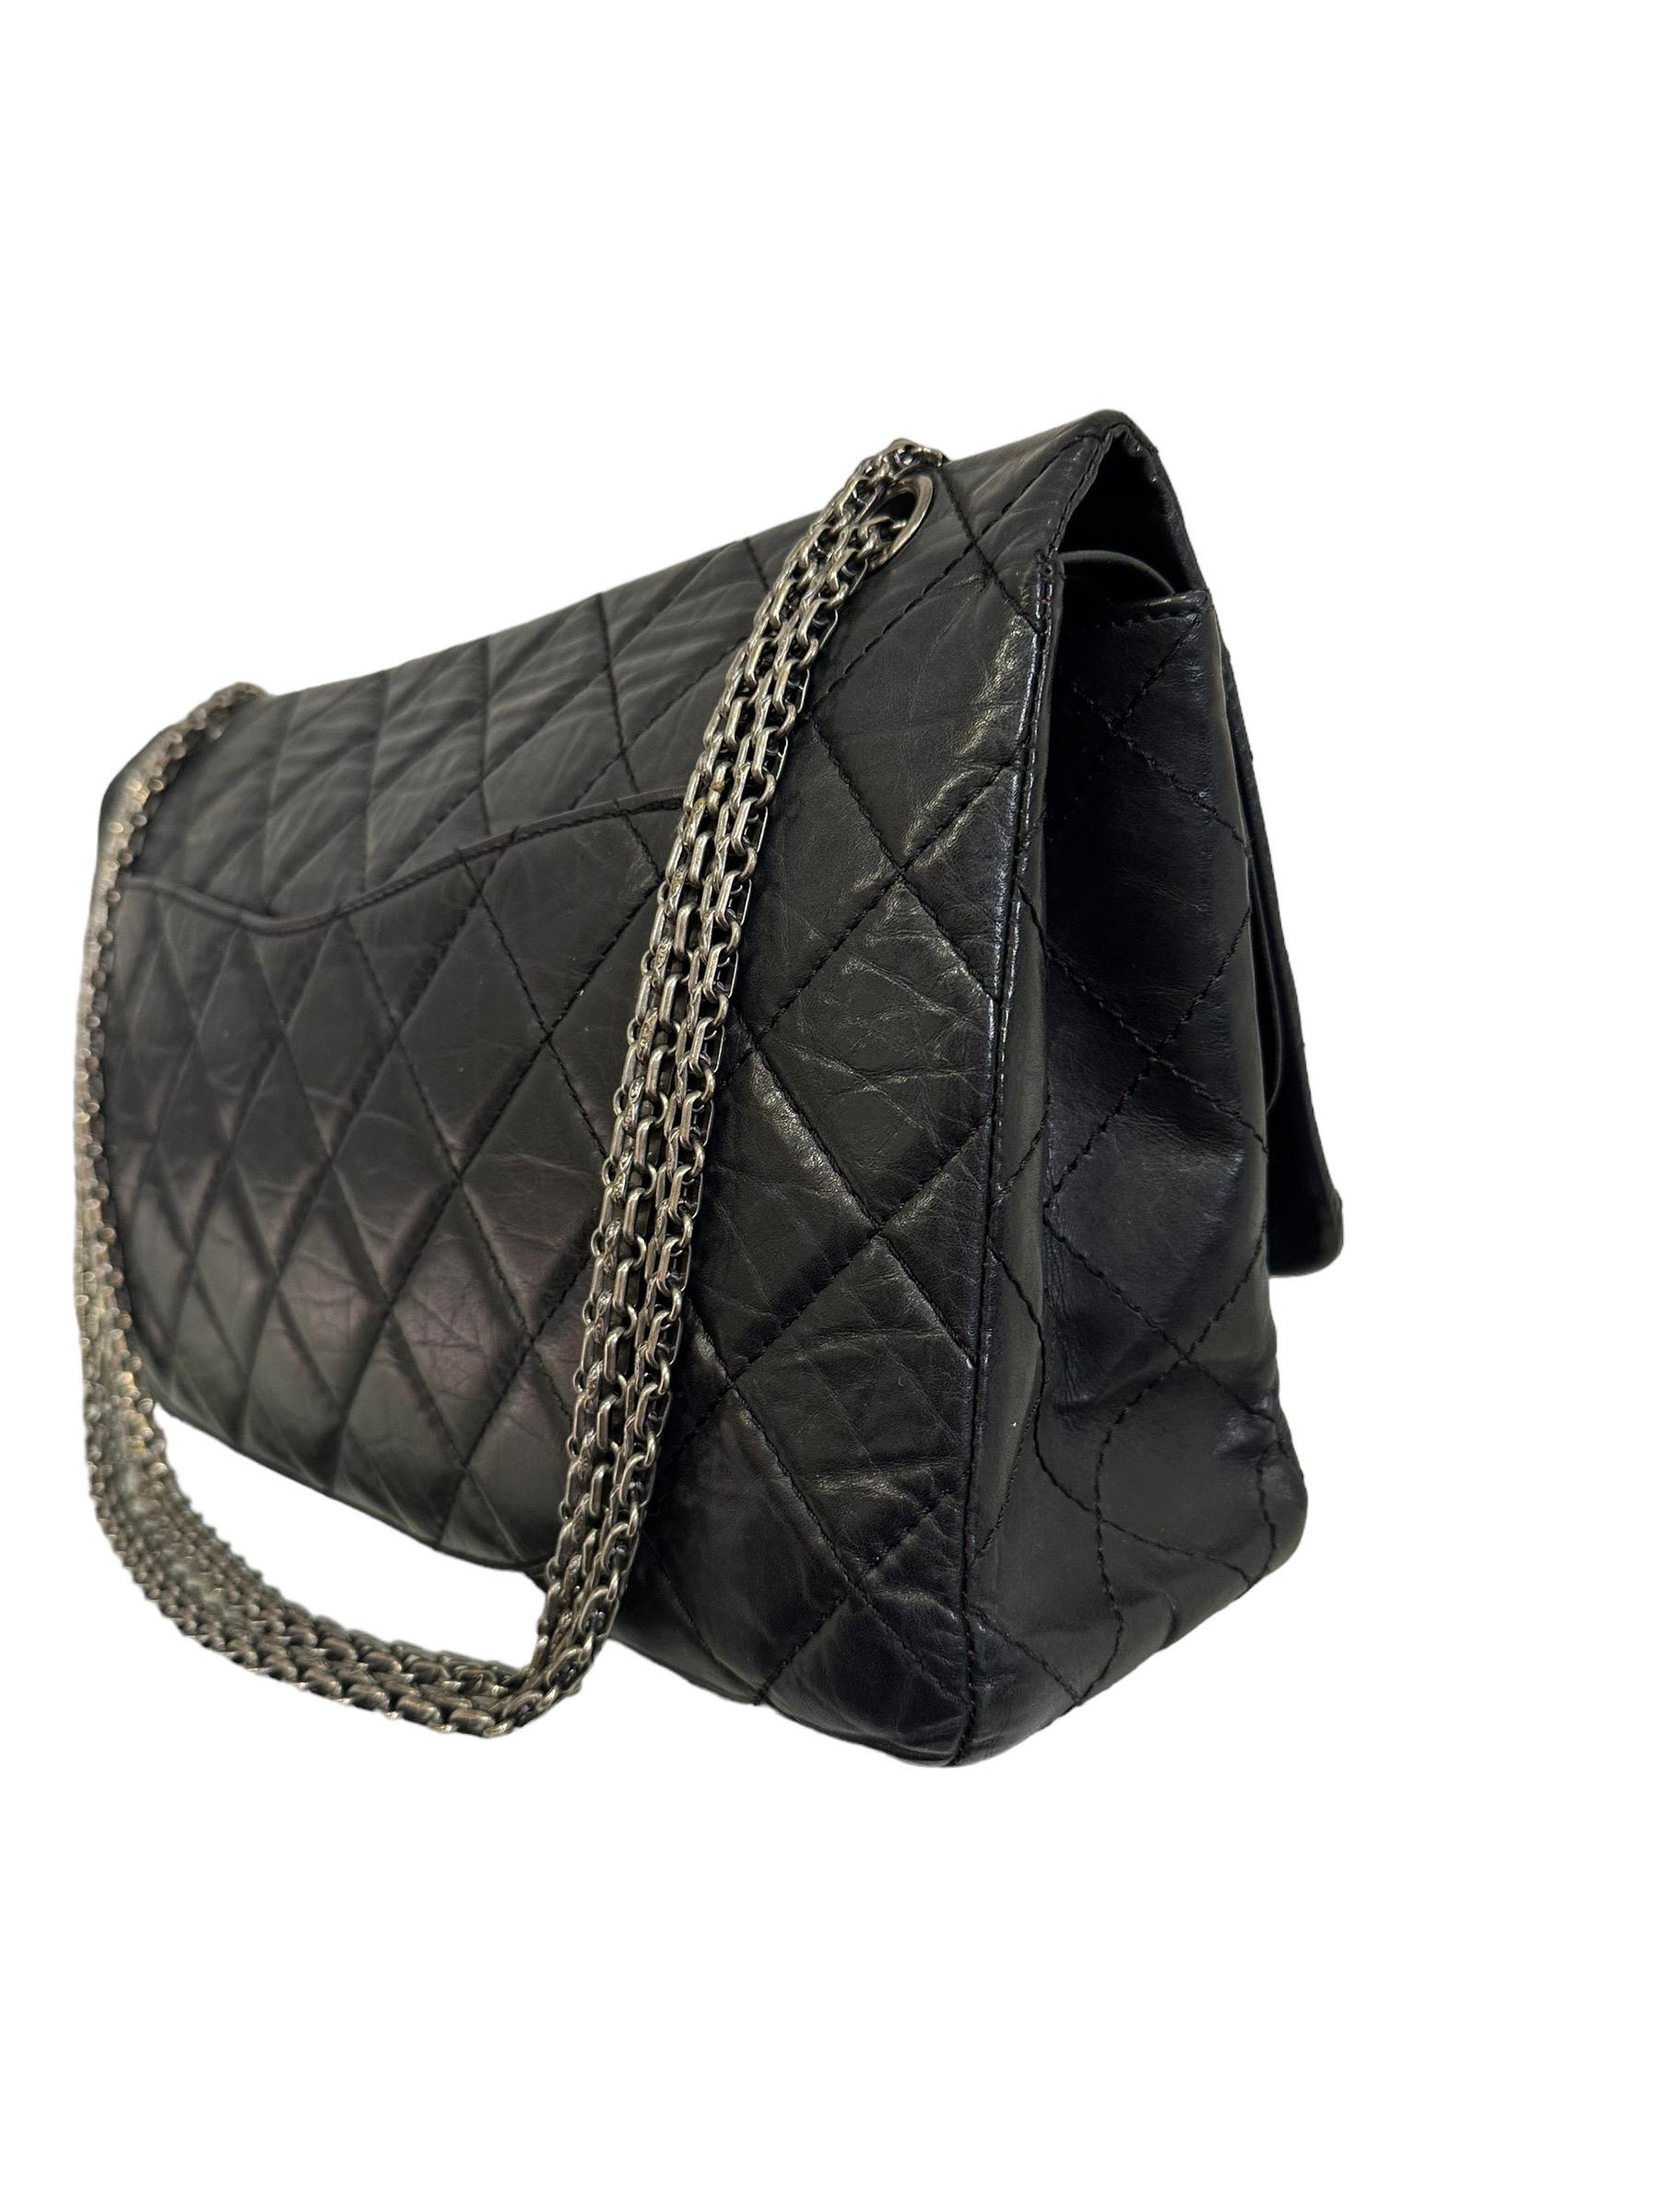 2008 Chanel Reissue Maxi Jumbo Blue Top Shoulder Bag For Sale 7